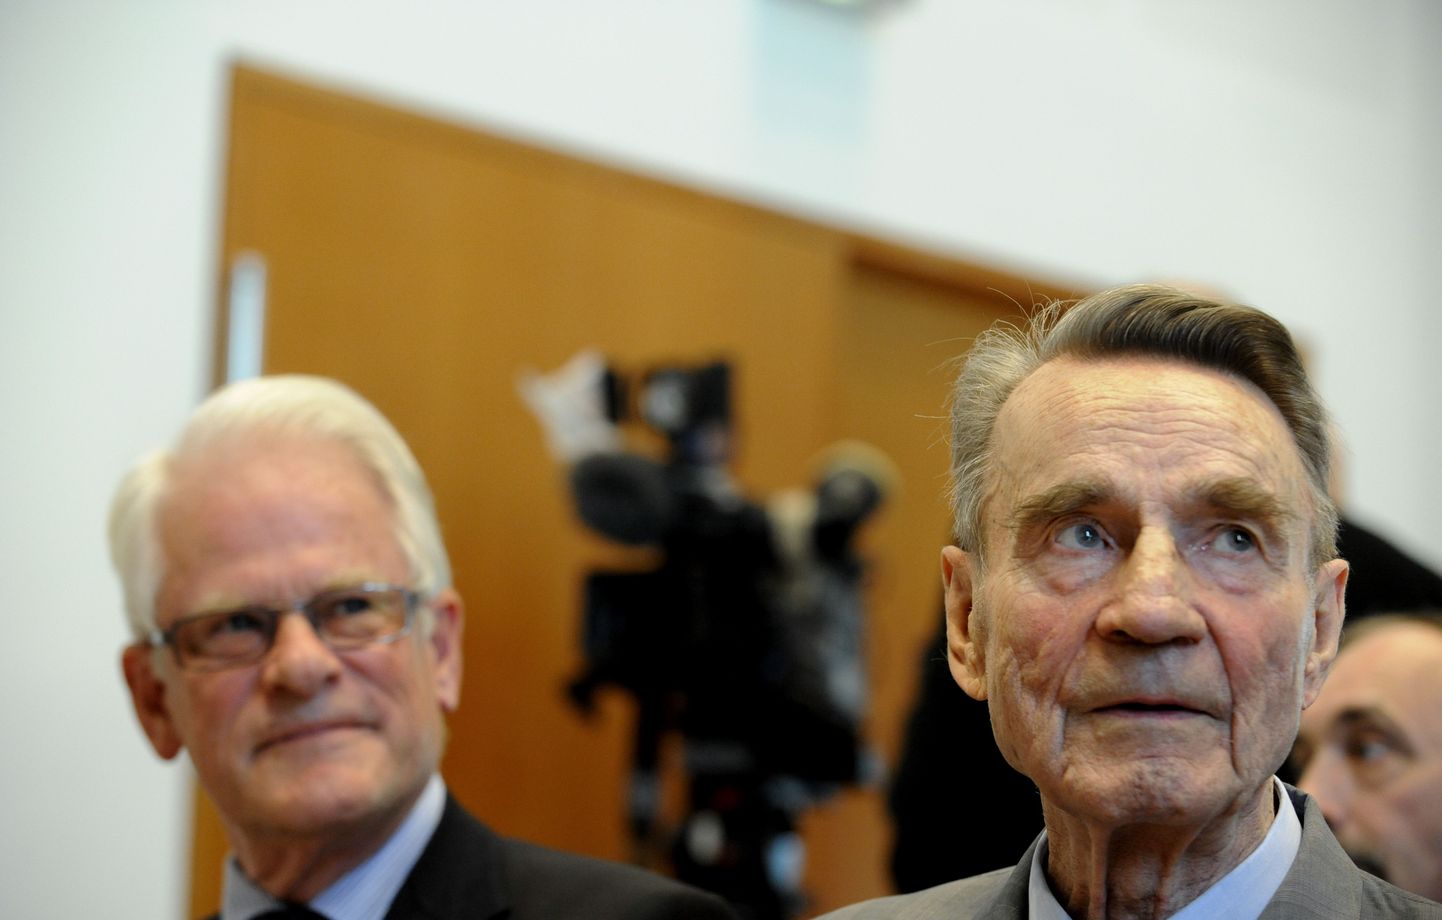 Soome endine president Mauno Koivisto (paremal) ja Rootsi endine peaminister  
Ingvar Carlsson.